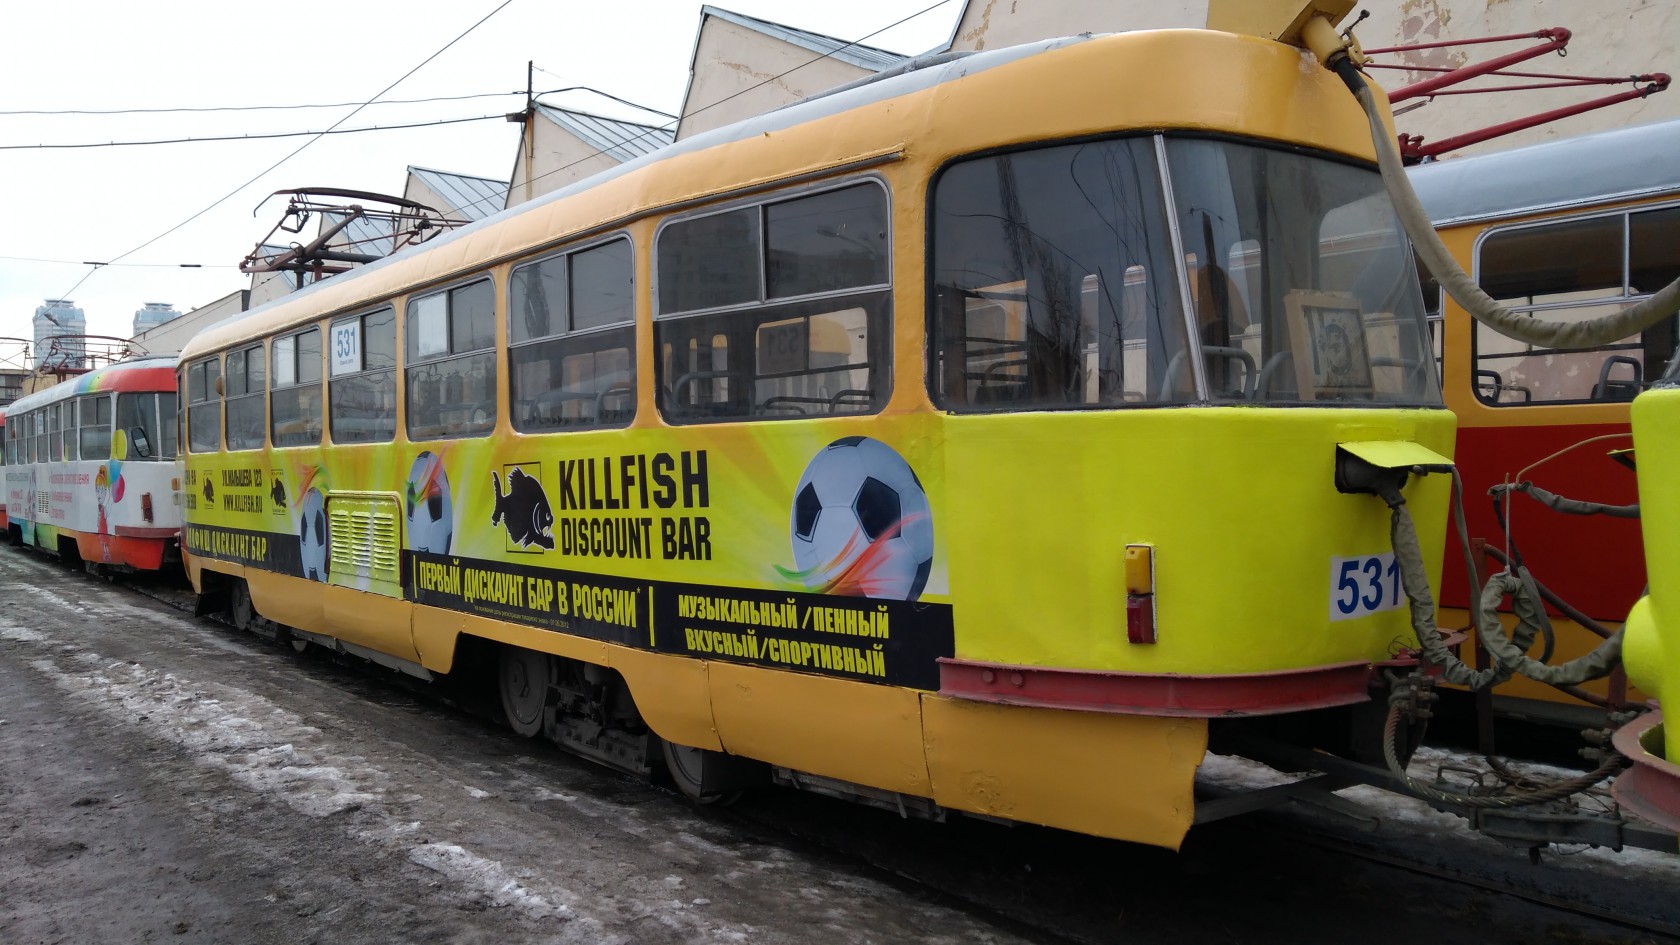 Размещение рекламы дискаунт бара KILL FISH на трамваях